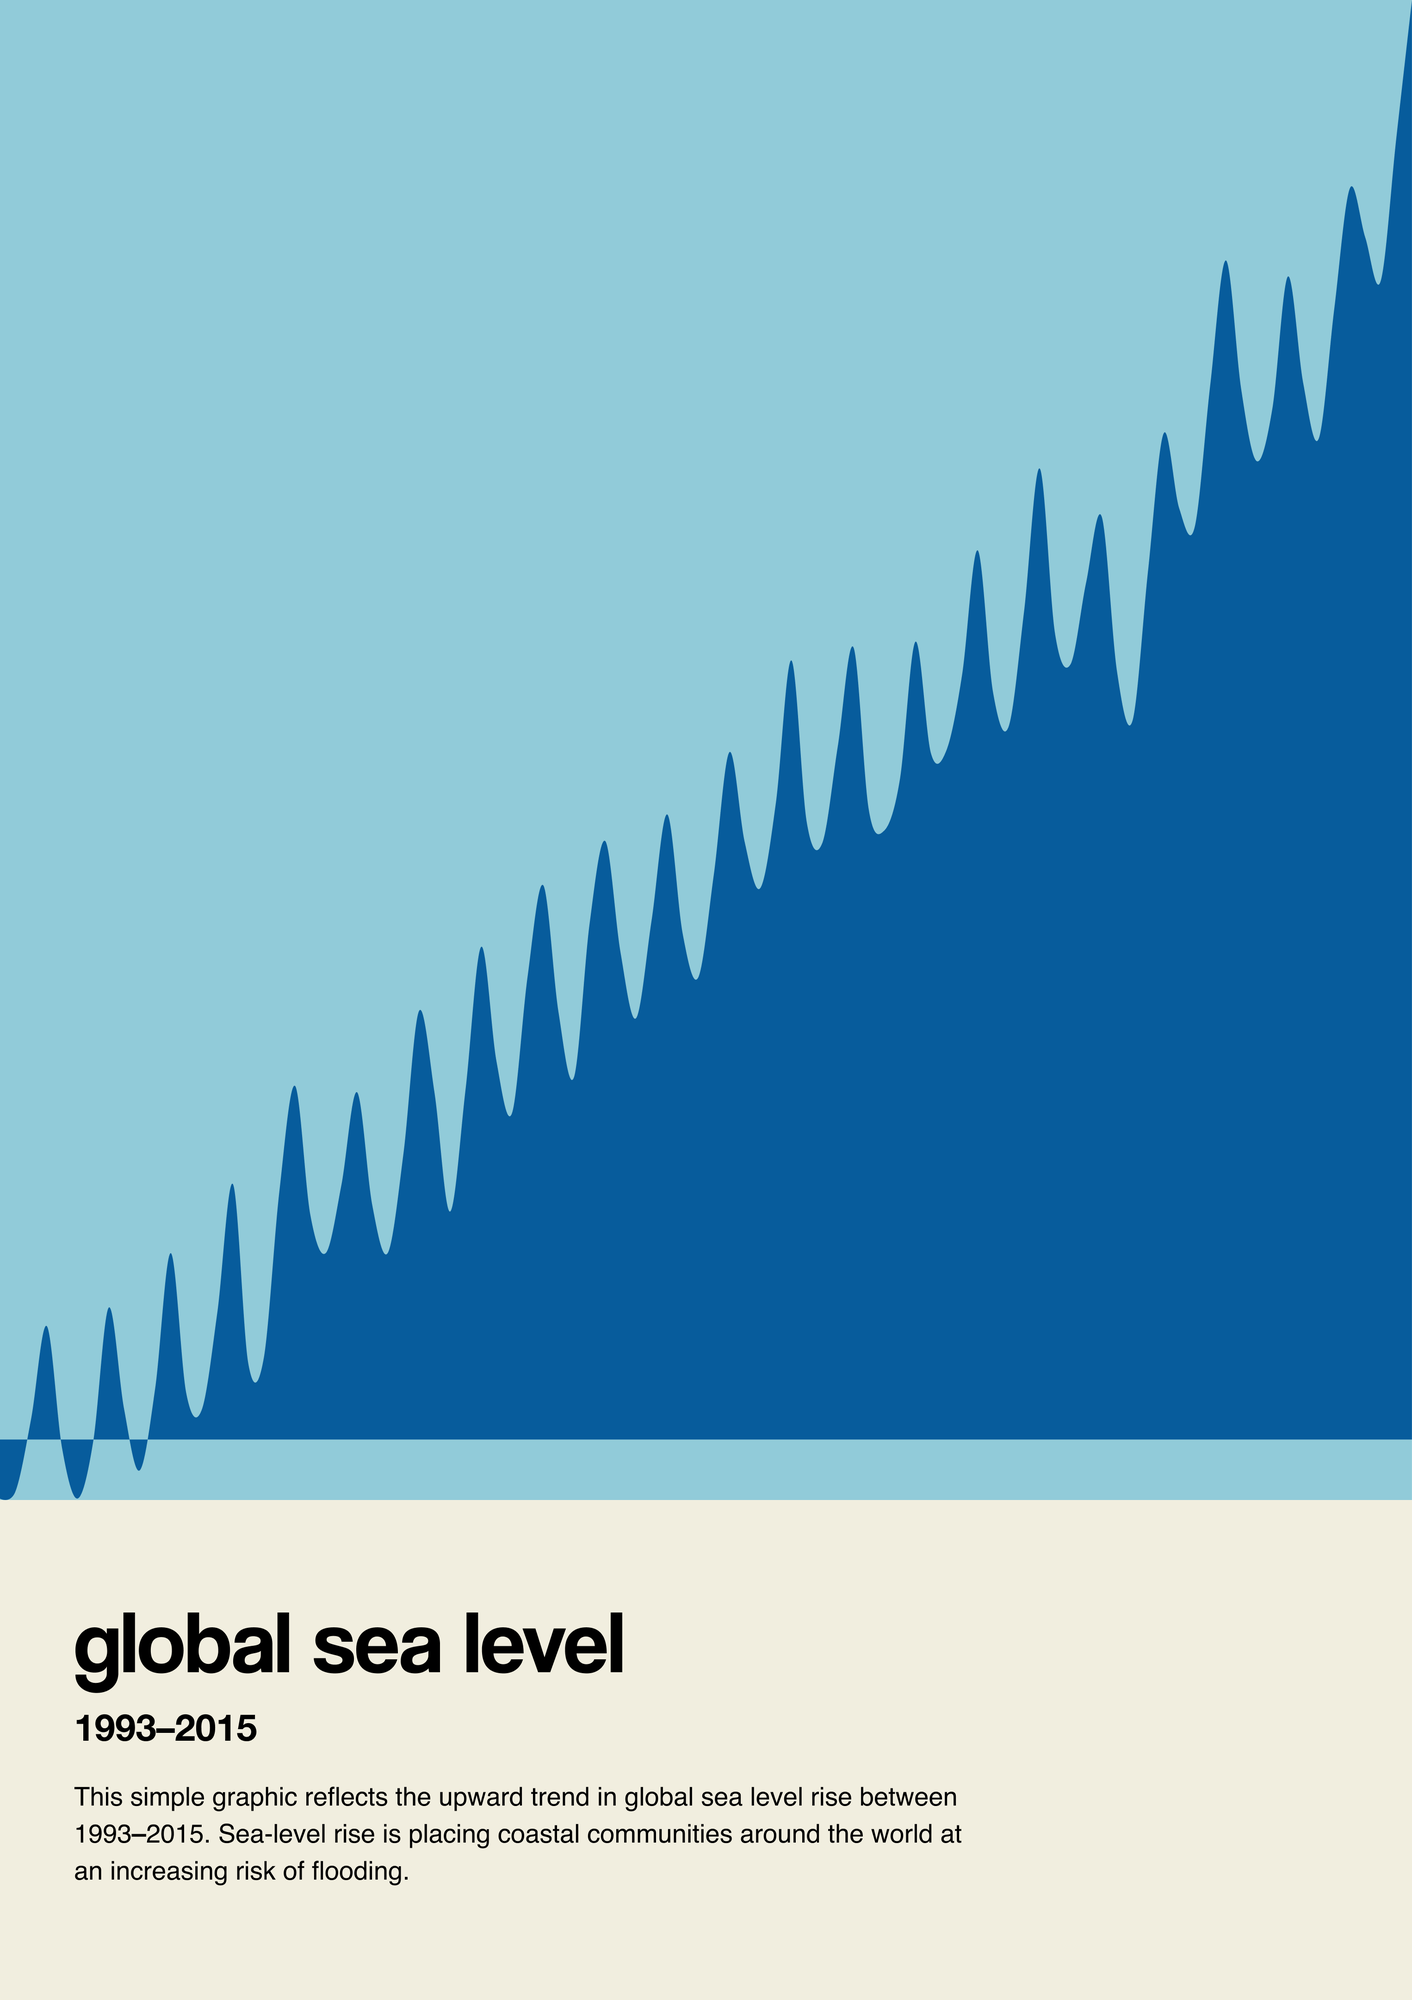 Global mean sea level